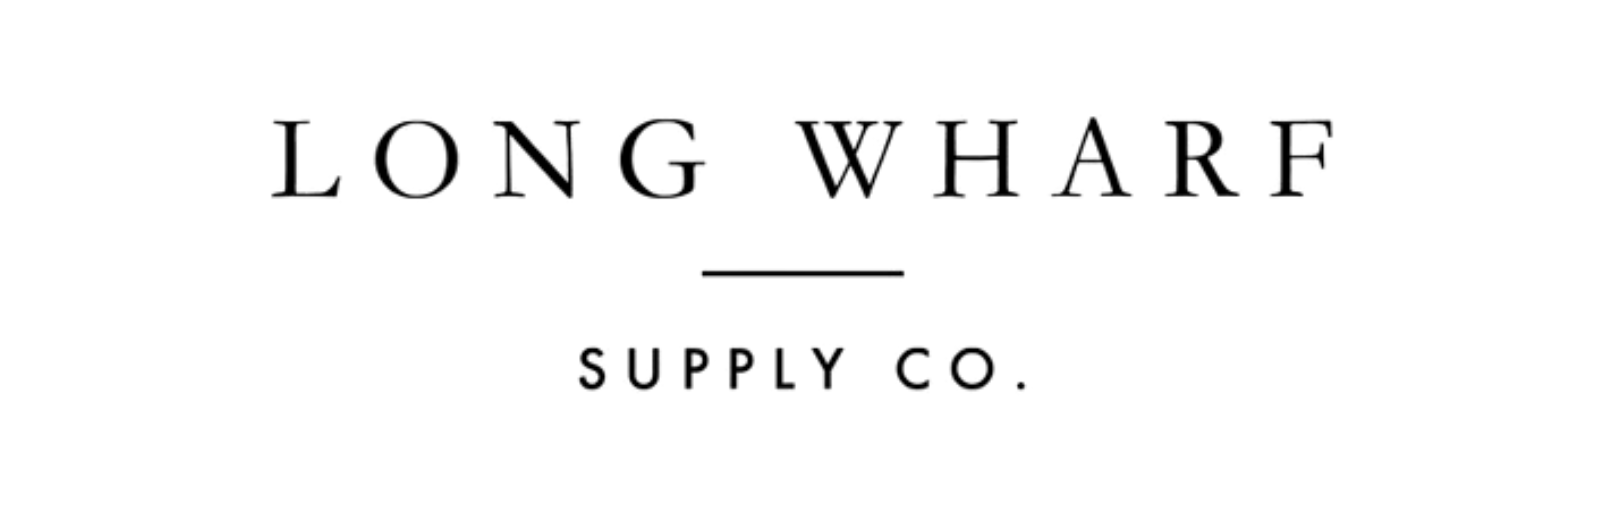 Long Wharf Supply Co. Logo